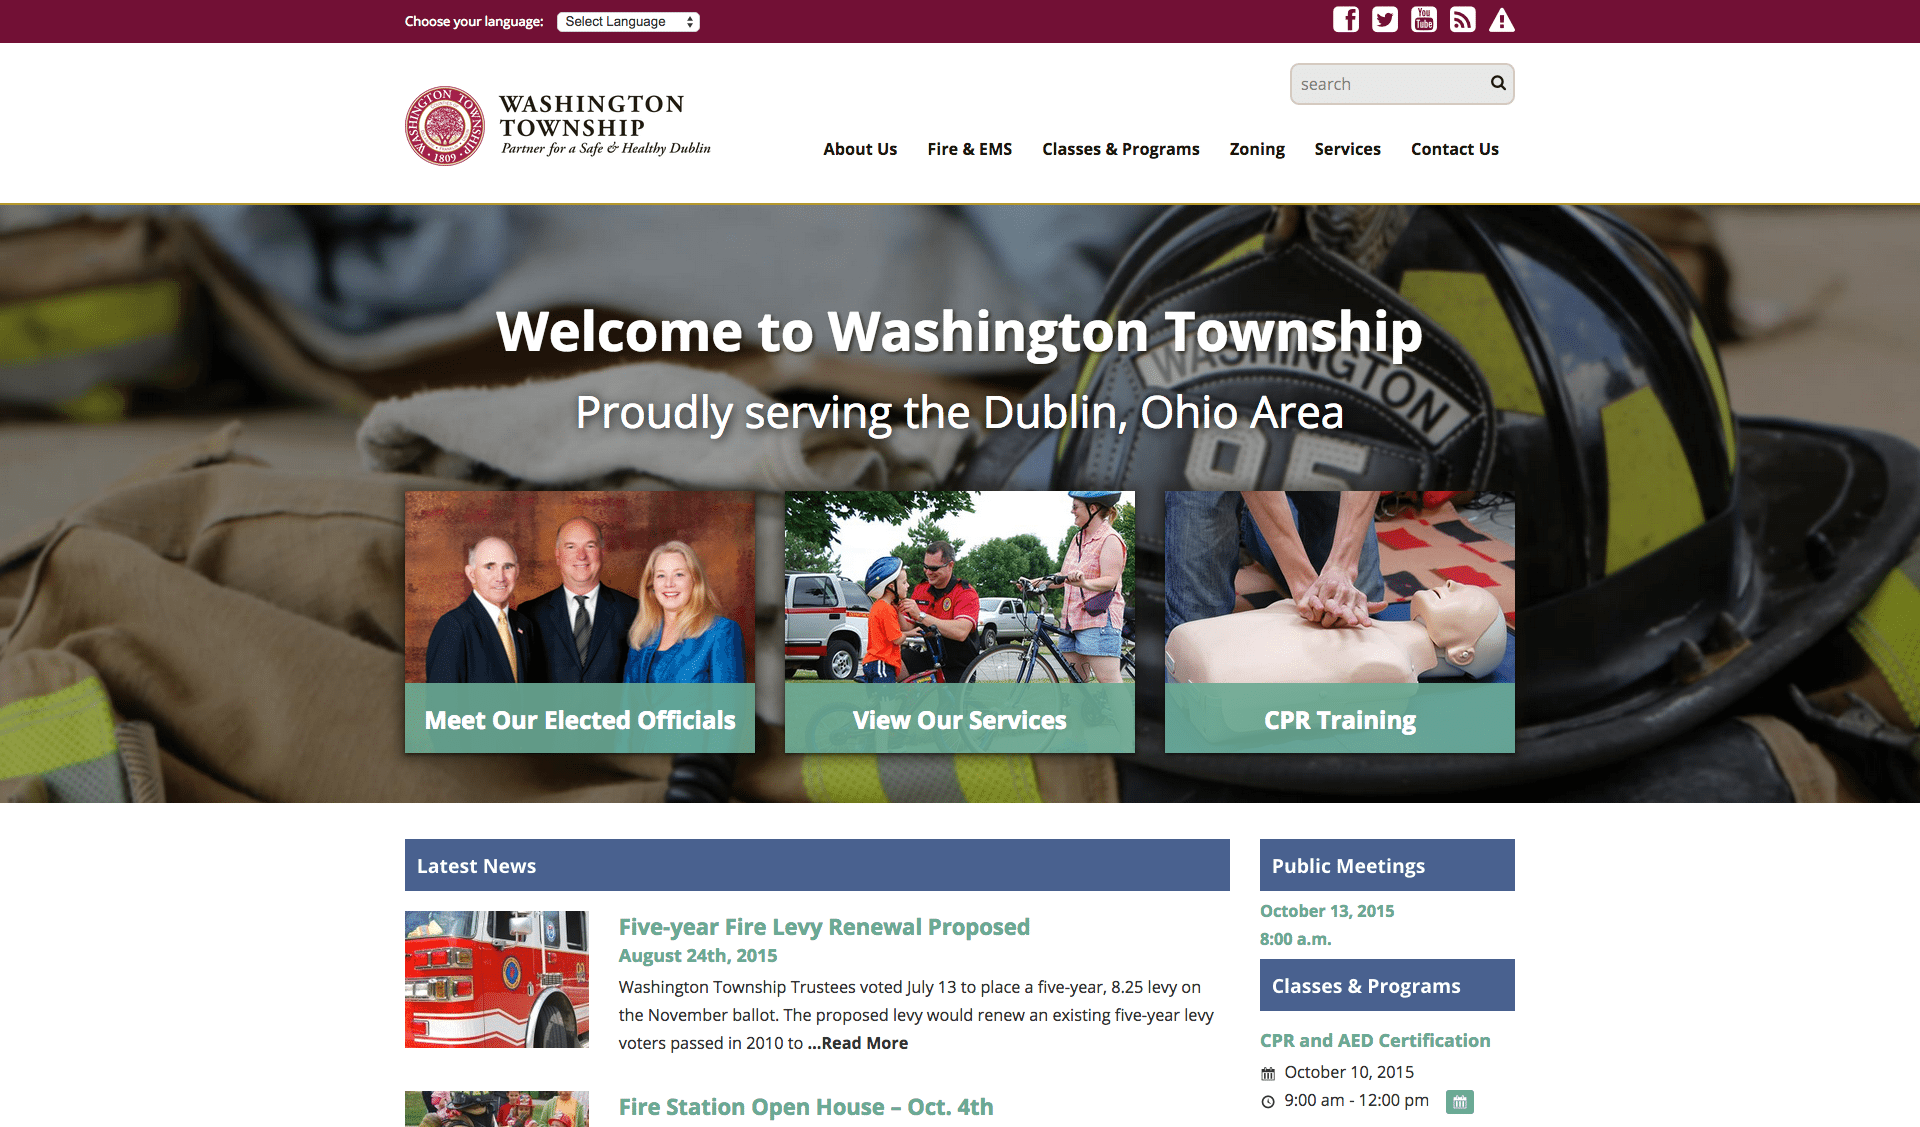 Washington Township in Dublin, Ohio announces launch of their new website